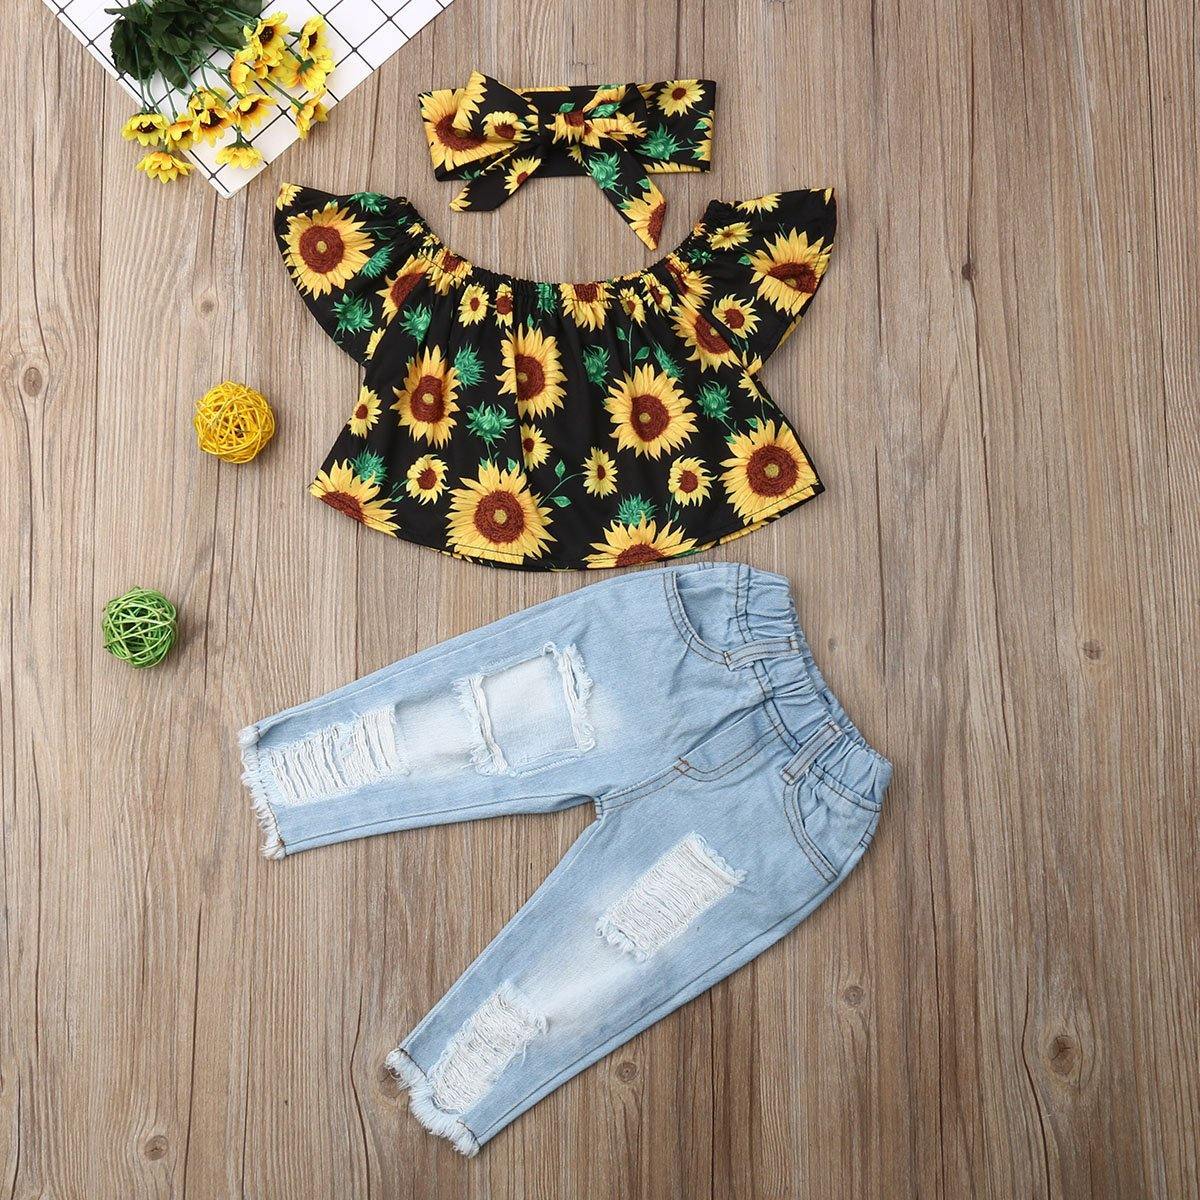 Set Sunflower Summer Outfit - 1LoveBaby